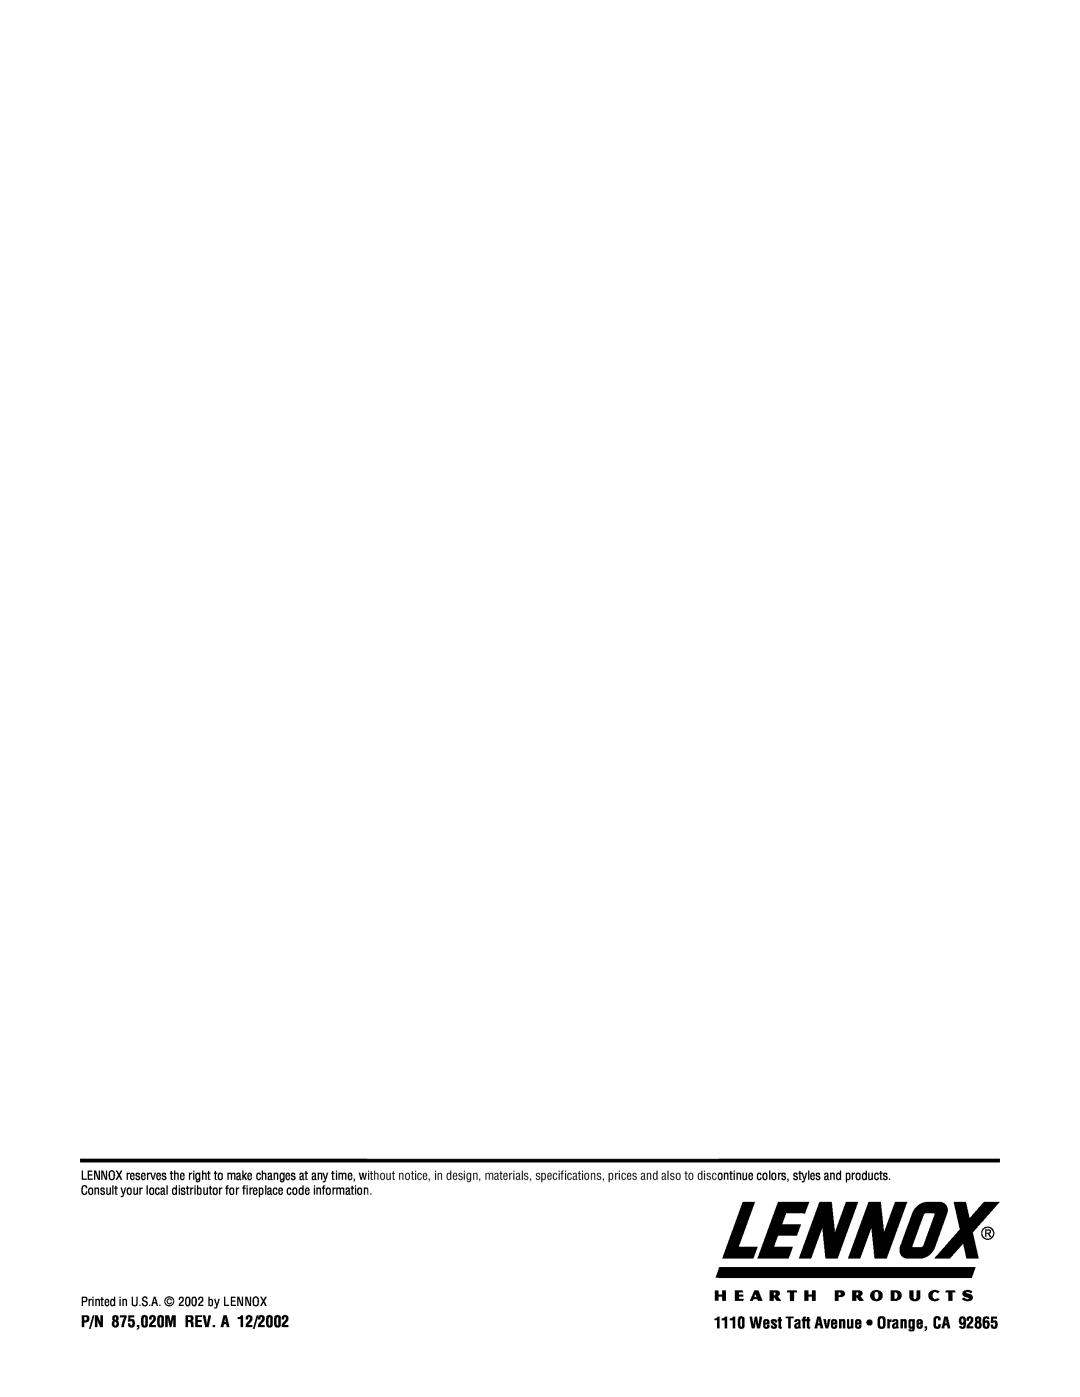 Magnavox LSS-40CP manual P/N 875,020M REV. A 12/2002, West Taft Avenue Orange, CA 